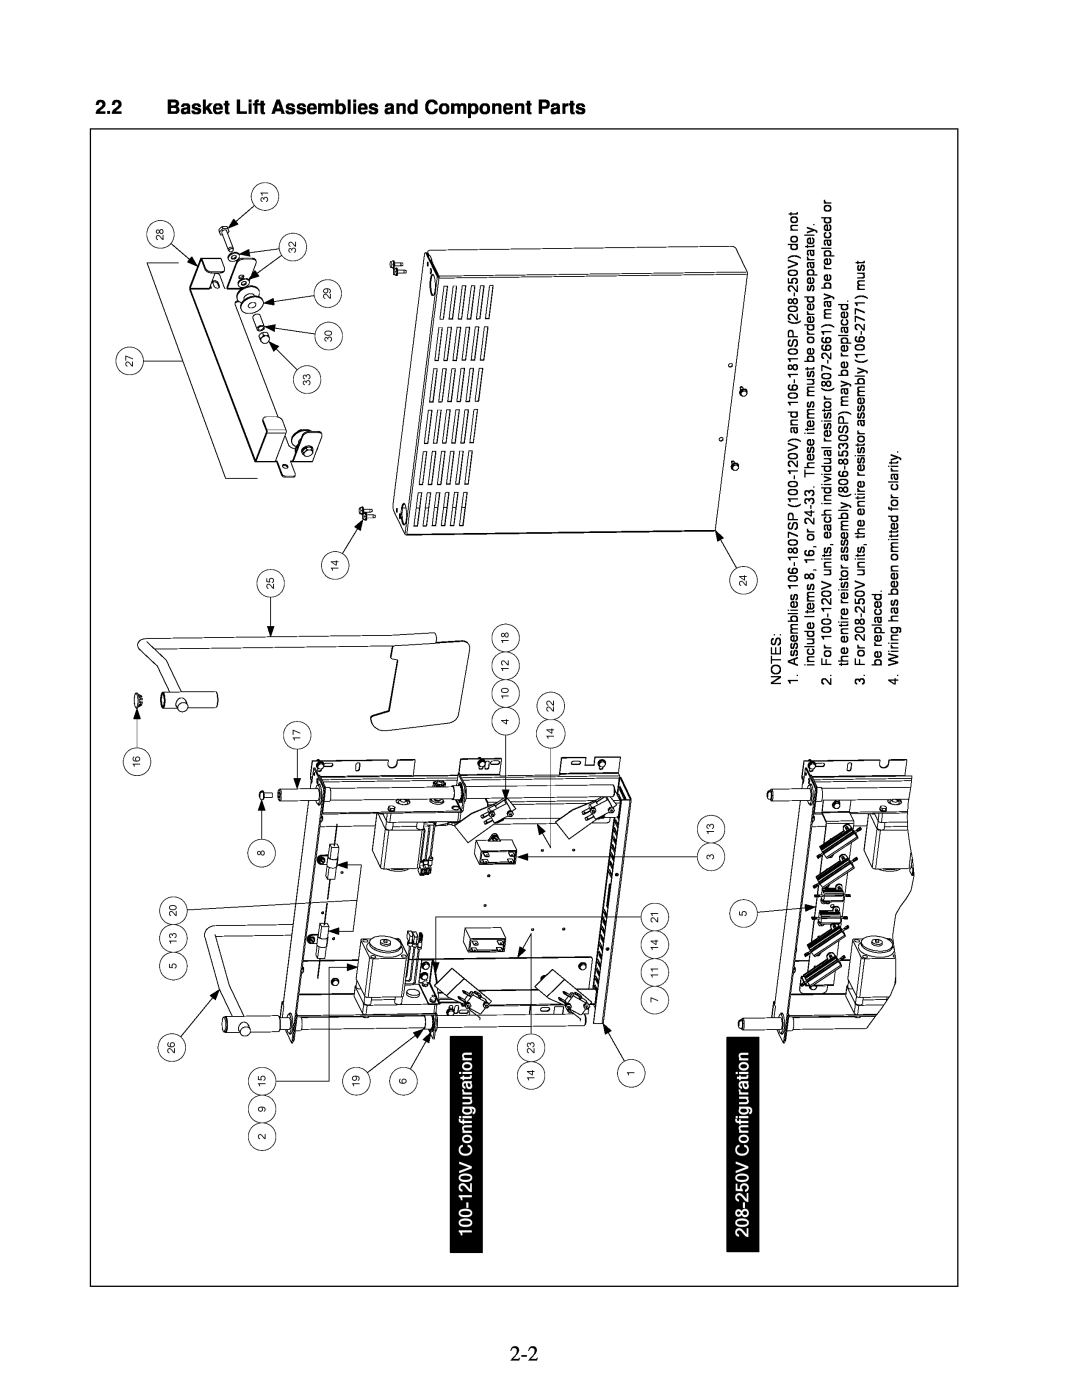 Frymaster H50 manual Basket Lift, Assemblies and, Component Parts, 100-120VConfiguration, 208-250VConfiguration 